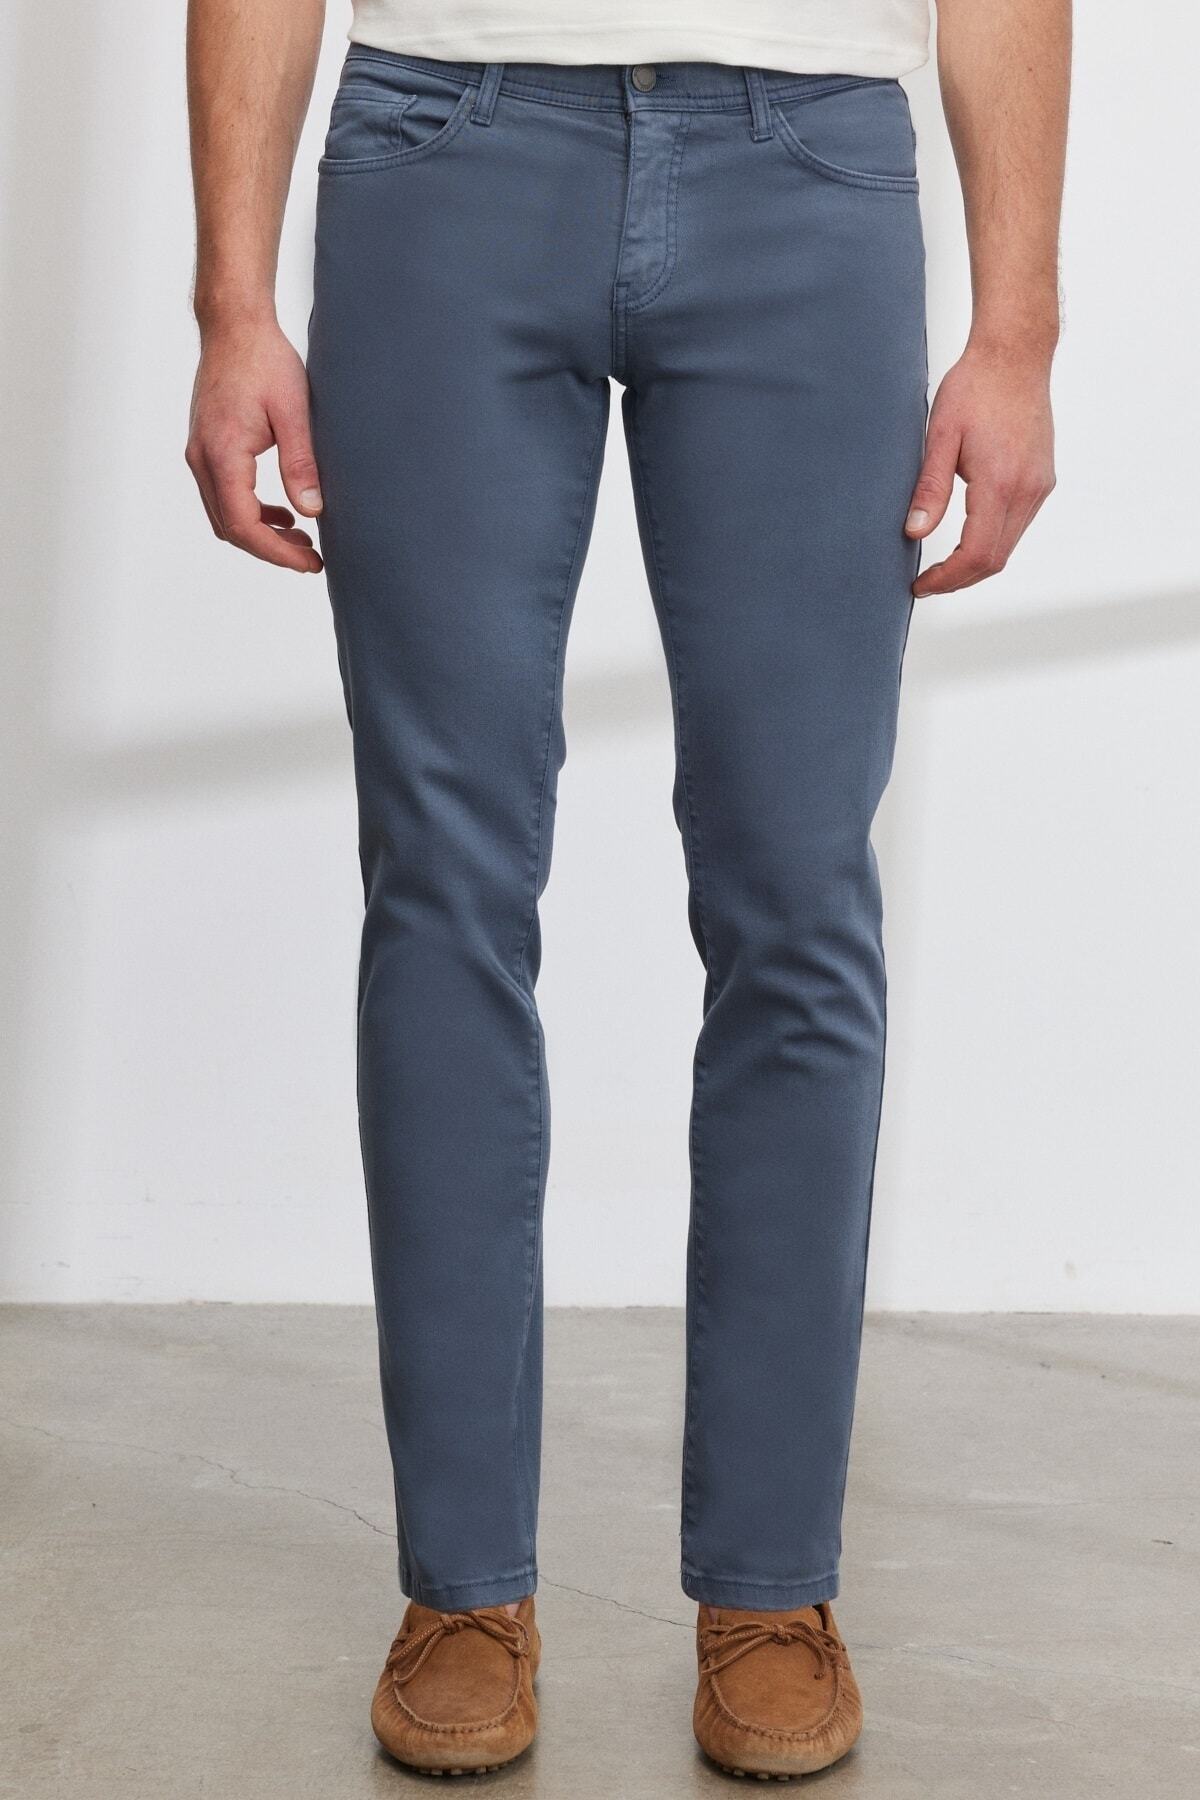 Levně ALTINYILDIZ CLASSICS Men's Indigo Comfortable Slim Fit Slim-Fit Pants that Stretches 360 Degrees in All Directions.